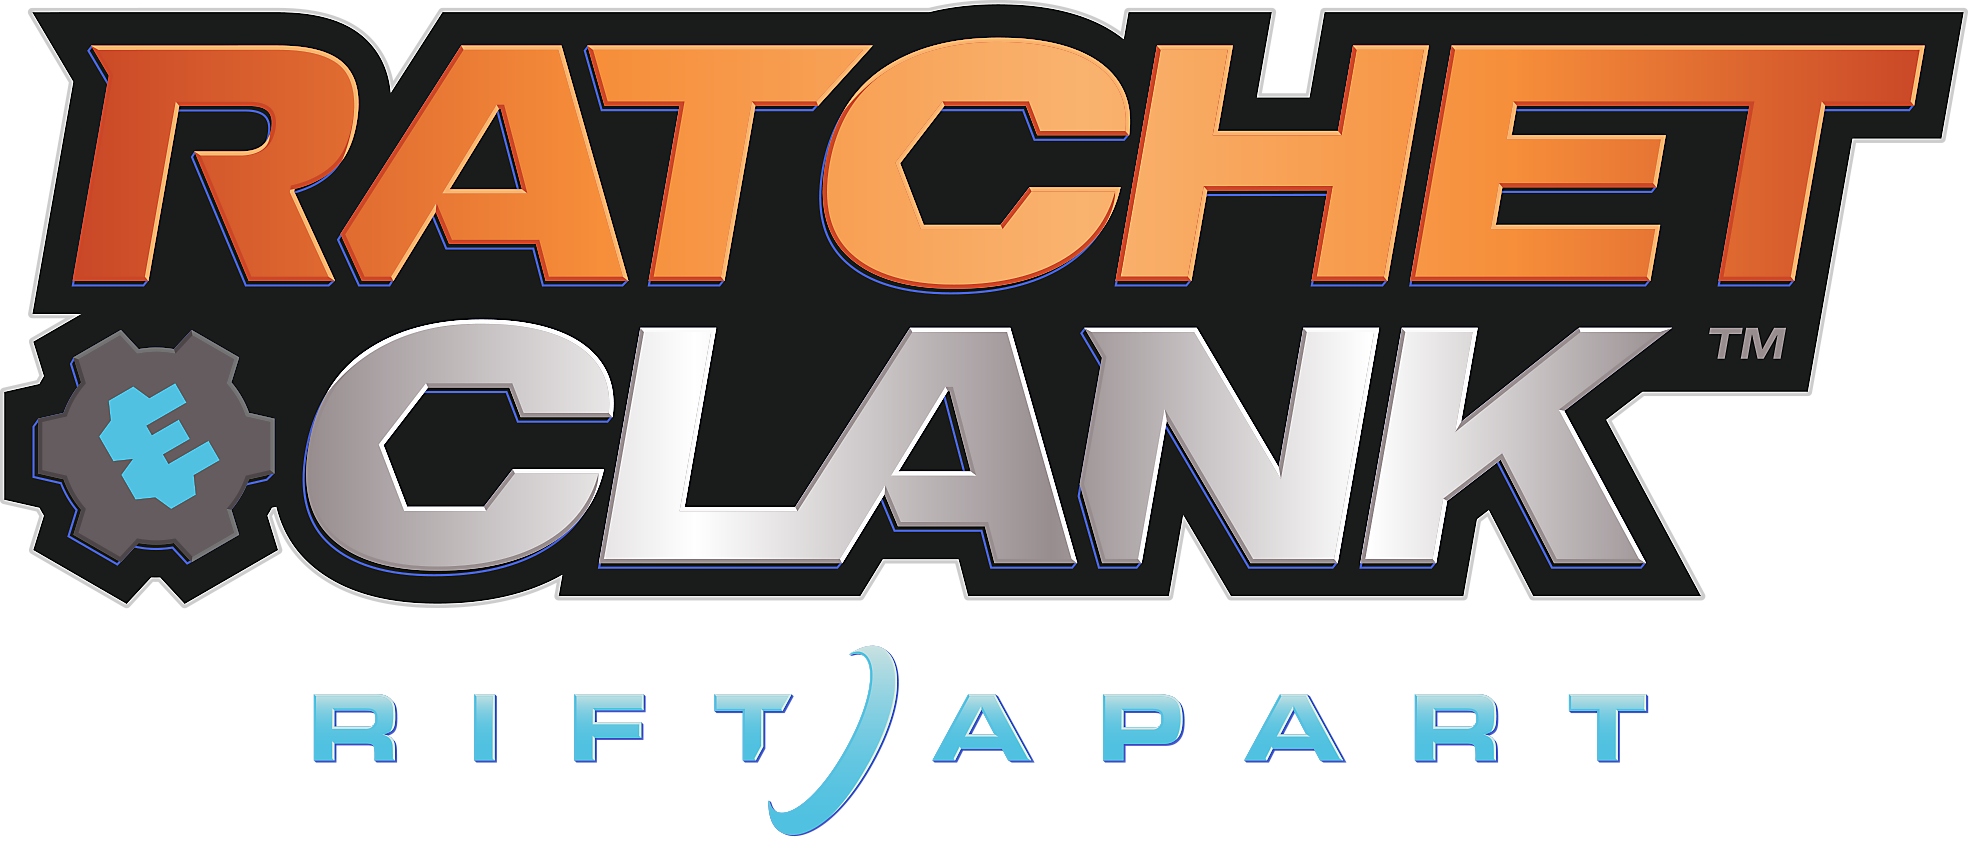 Logo de Ratchet & Clank: Rift Apart